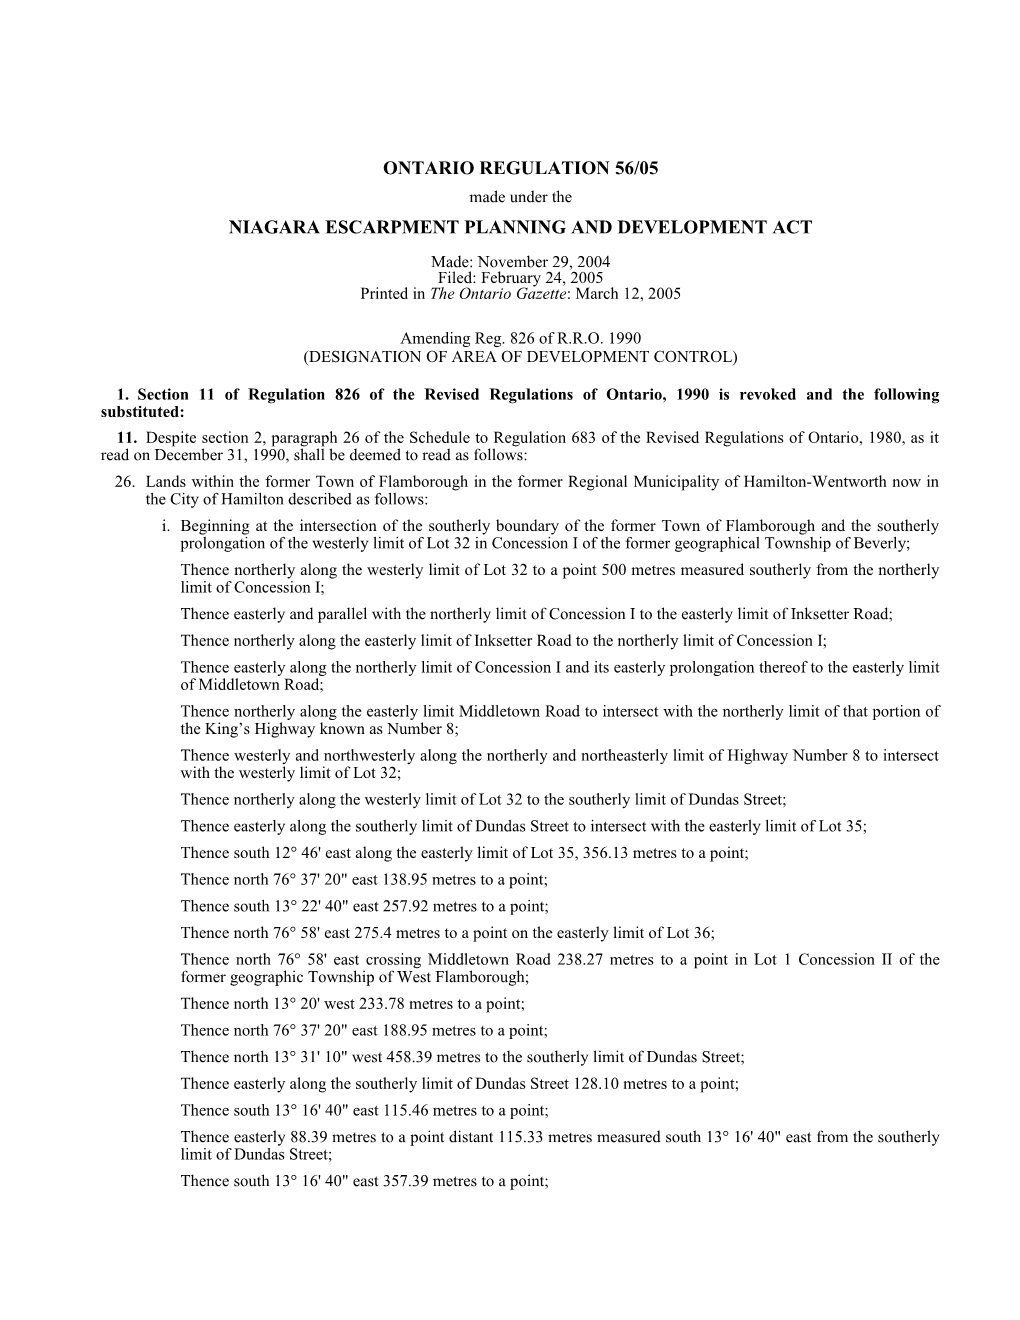 NIAGARA ESCARPMENT PLANNING and DEVELOPMENT ACT - O. Reg. 56/05